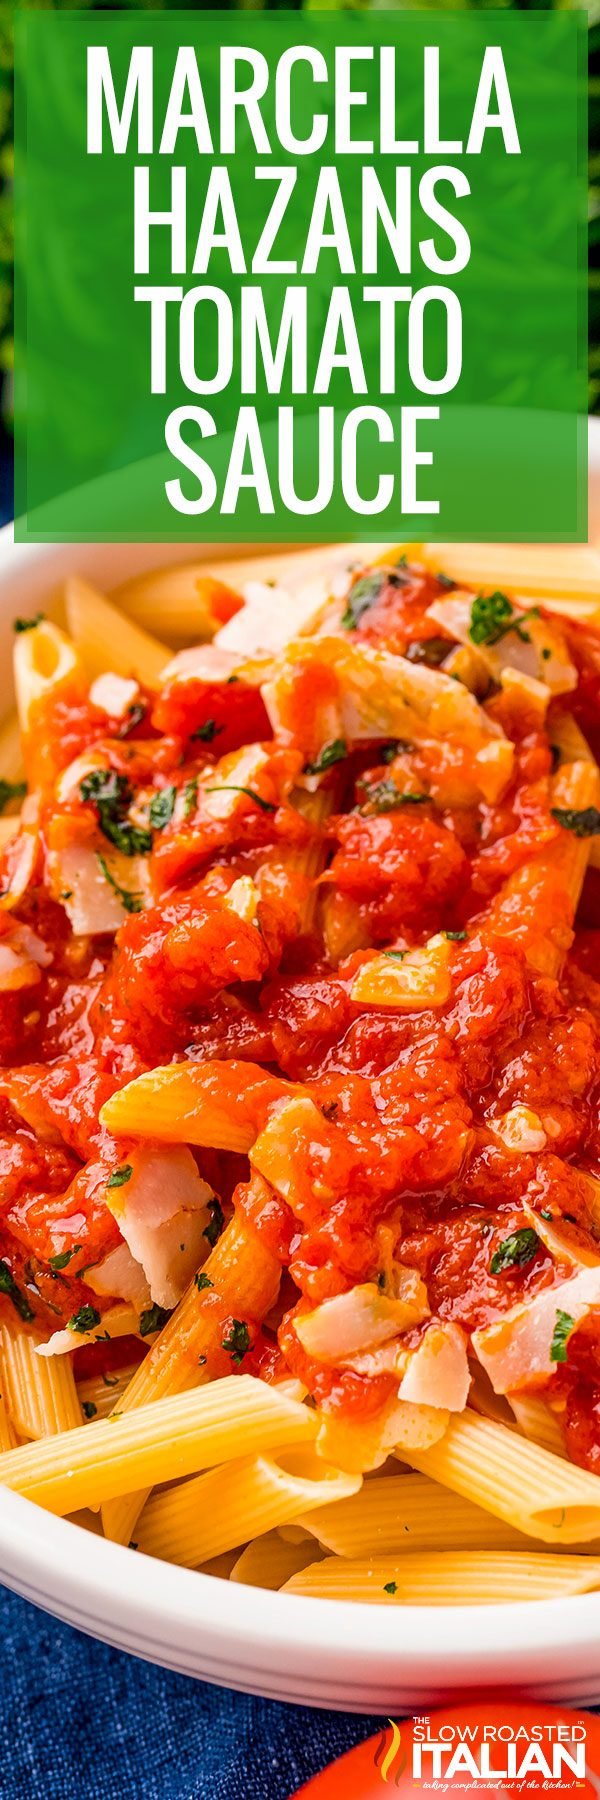 titled recipe collage for marcella hazan tomato sauce